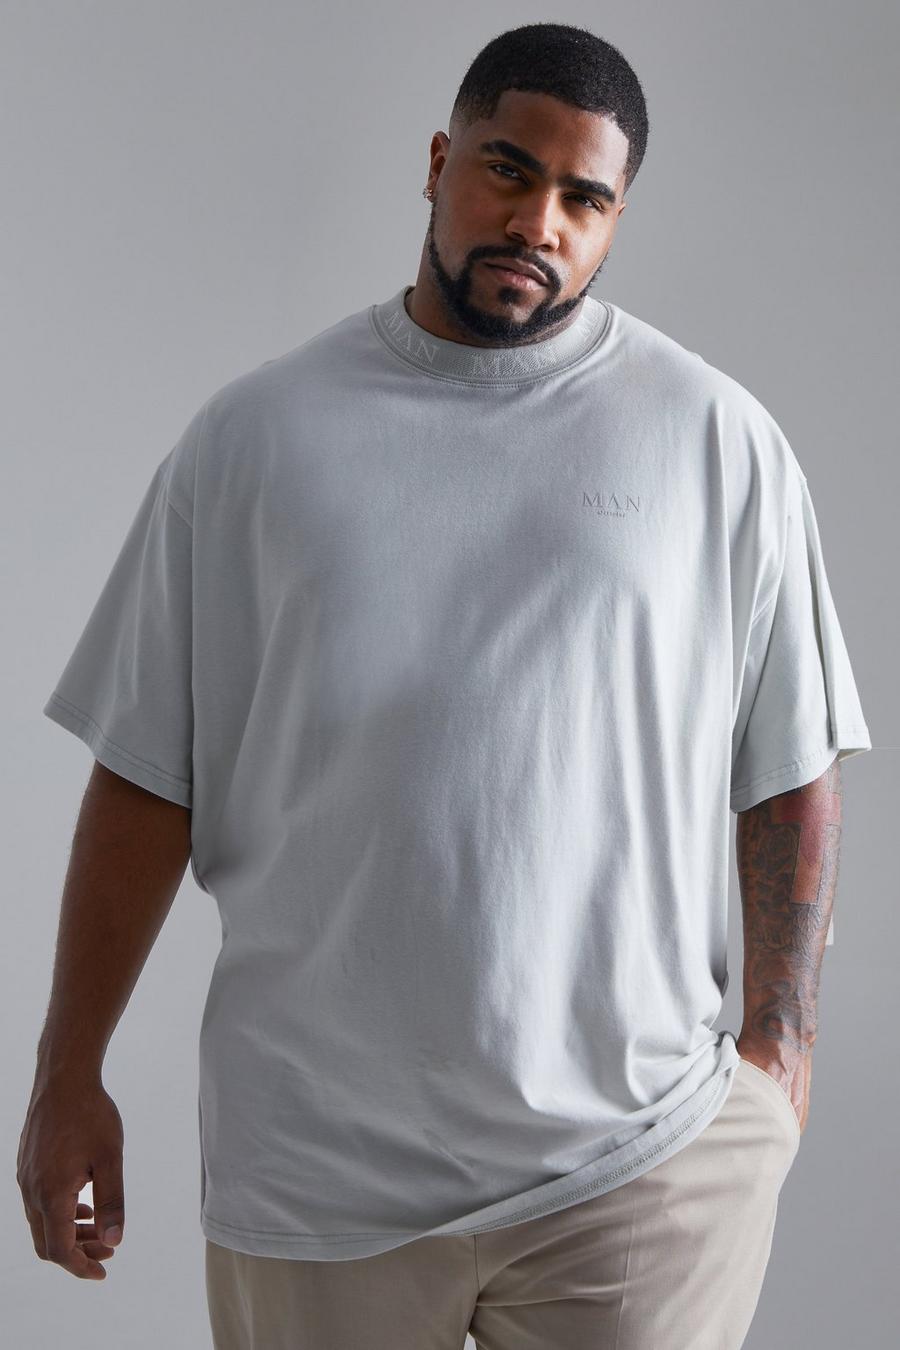 T-shirt Plus Size Man con caratteri romani e girocollo a coste, Light grey gris